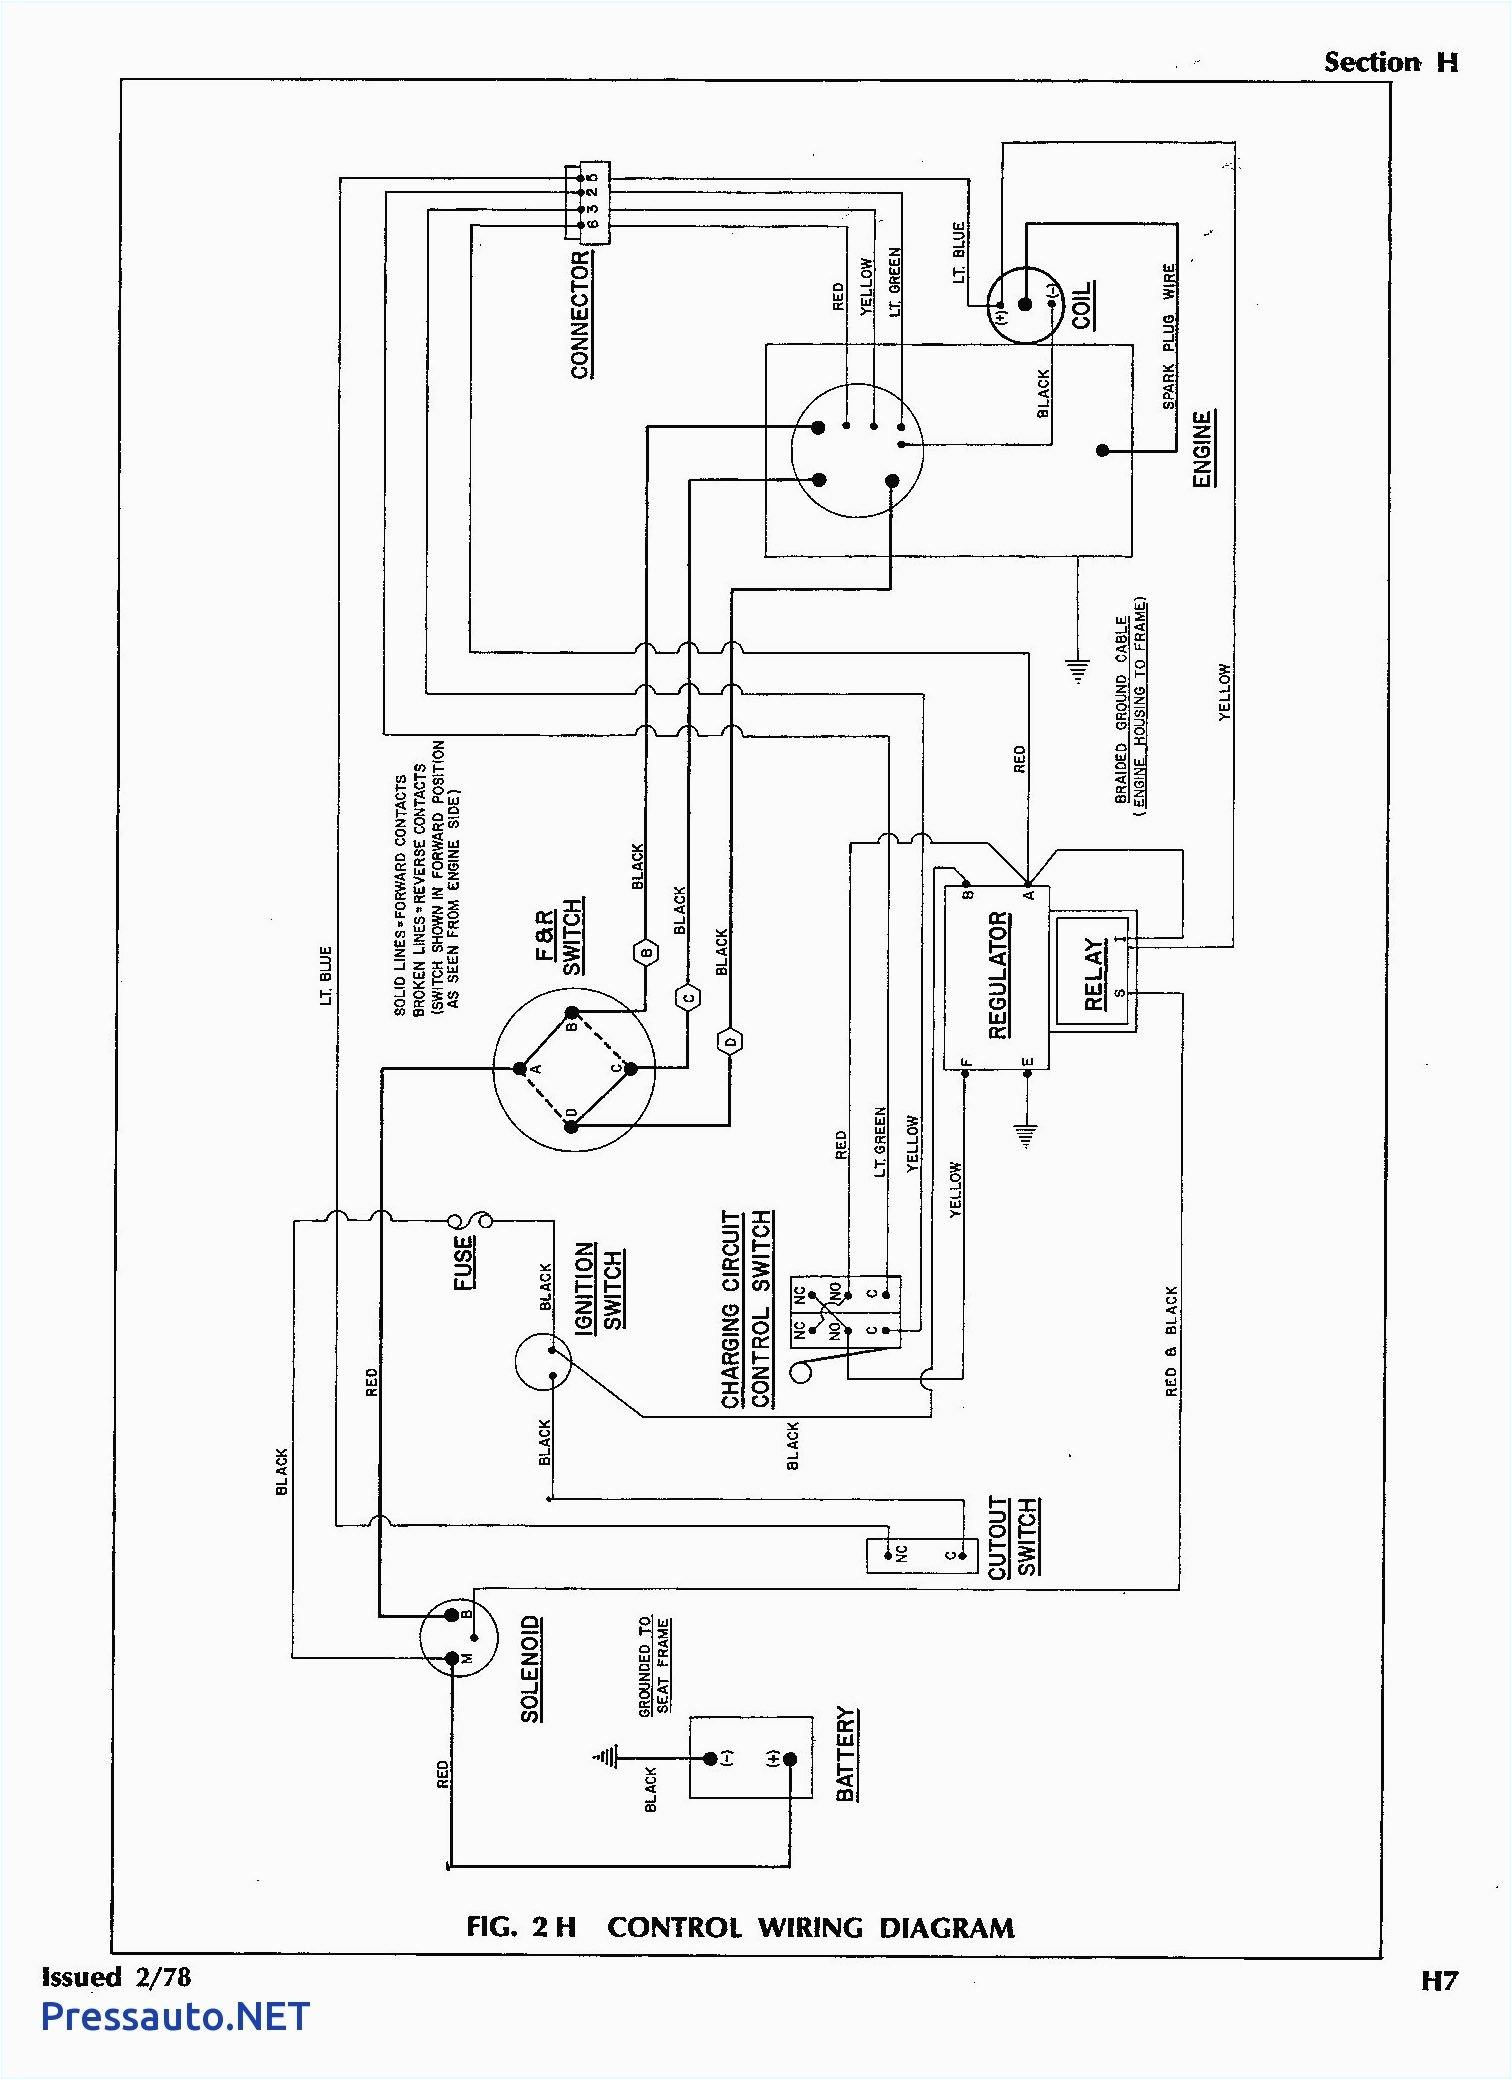 1994 ezgo gas golf cart wiring diagram free picture wiring diagram 1987 ez go gas golf